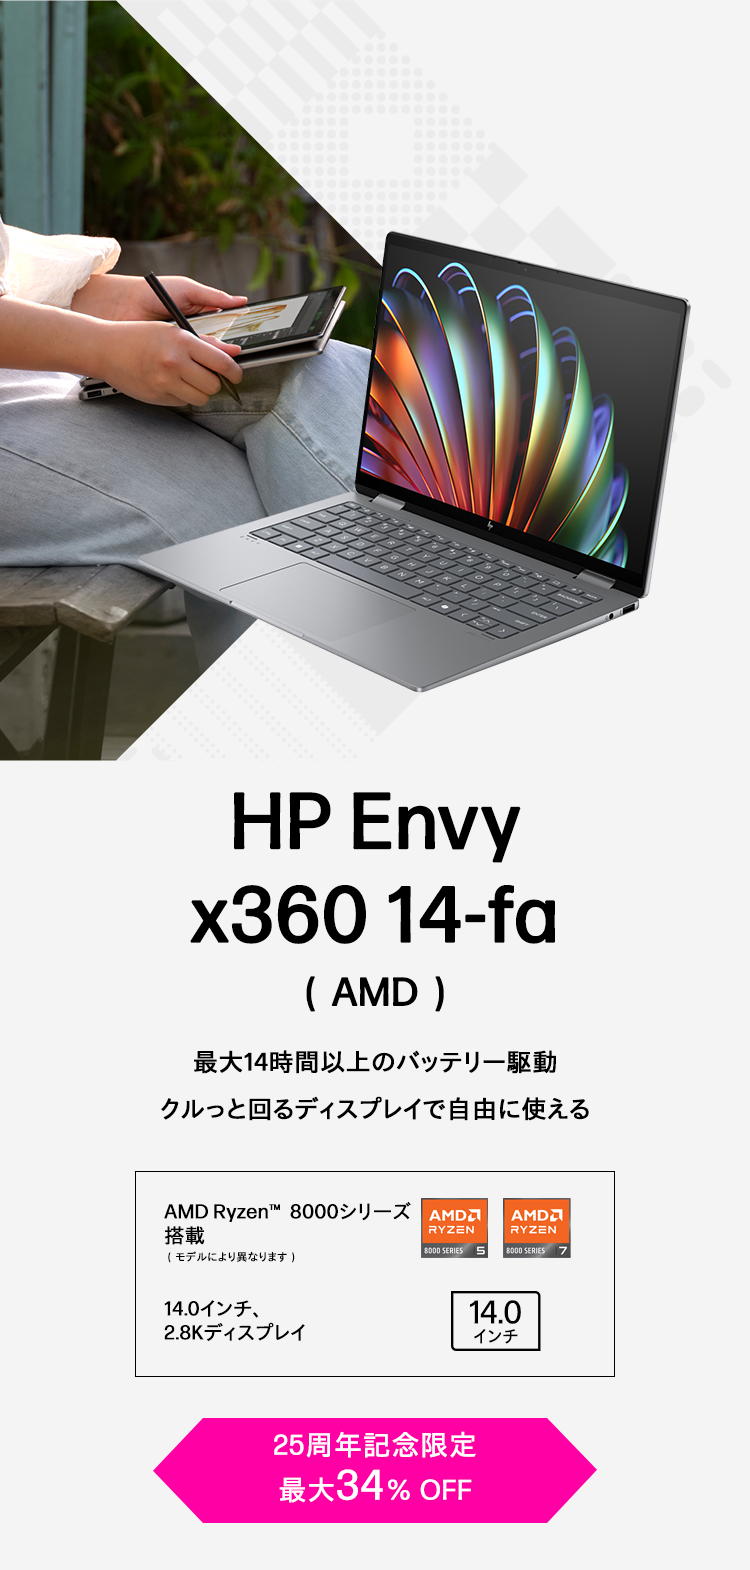 HP Envy x360 14-fa
（AMD） 